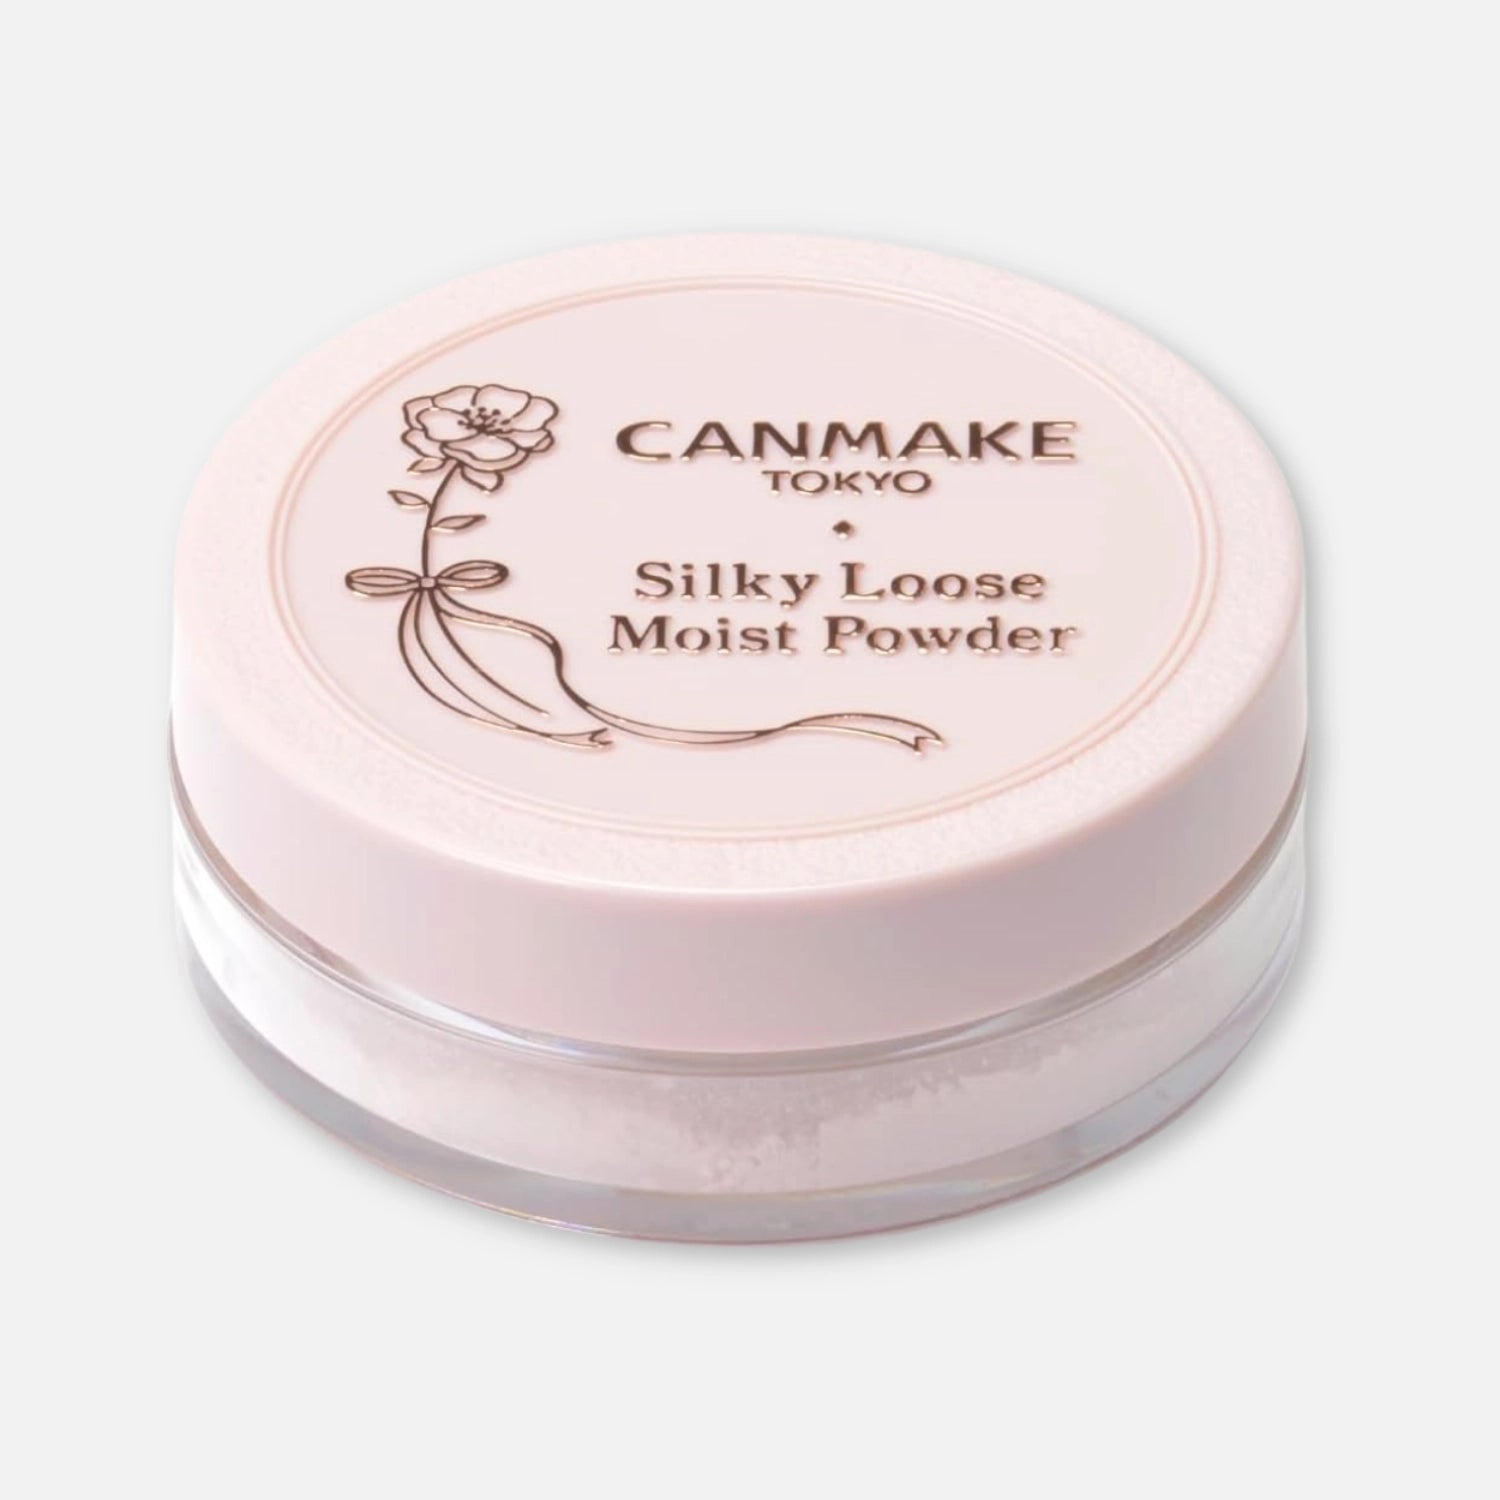 Canmake Silky Loose Moist Powder SPF23 PA++ 6g (Various Shades) - Buy Me Japan